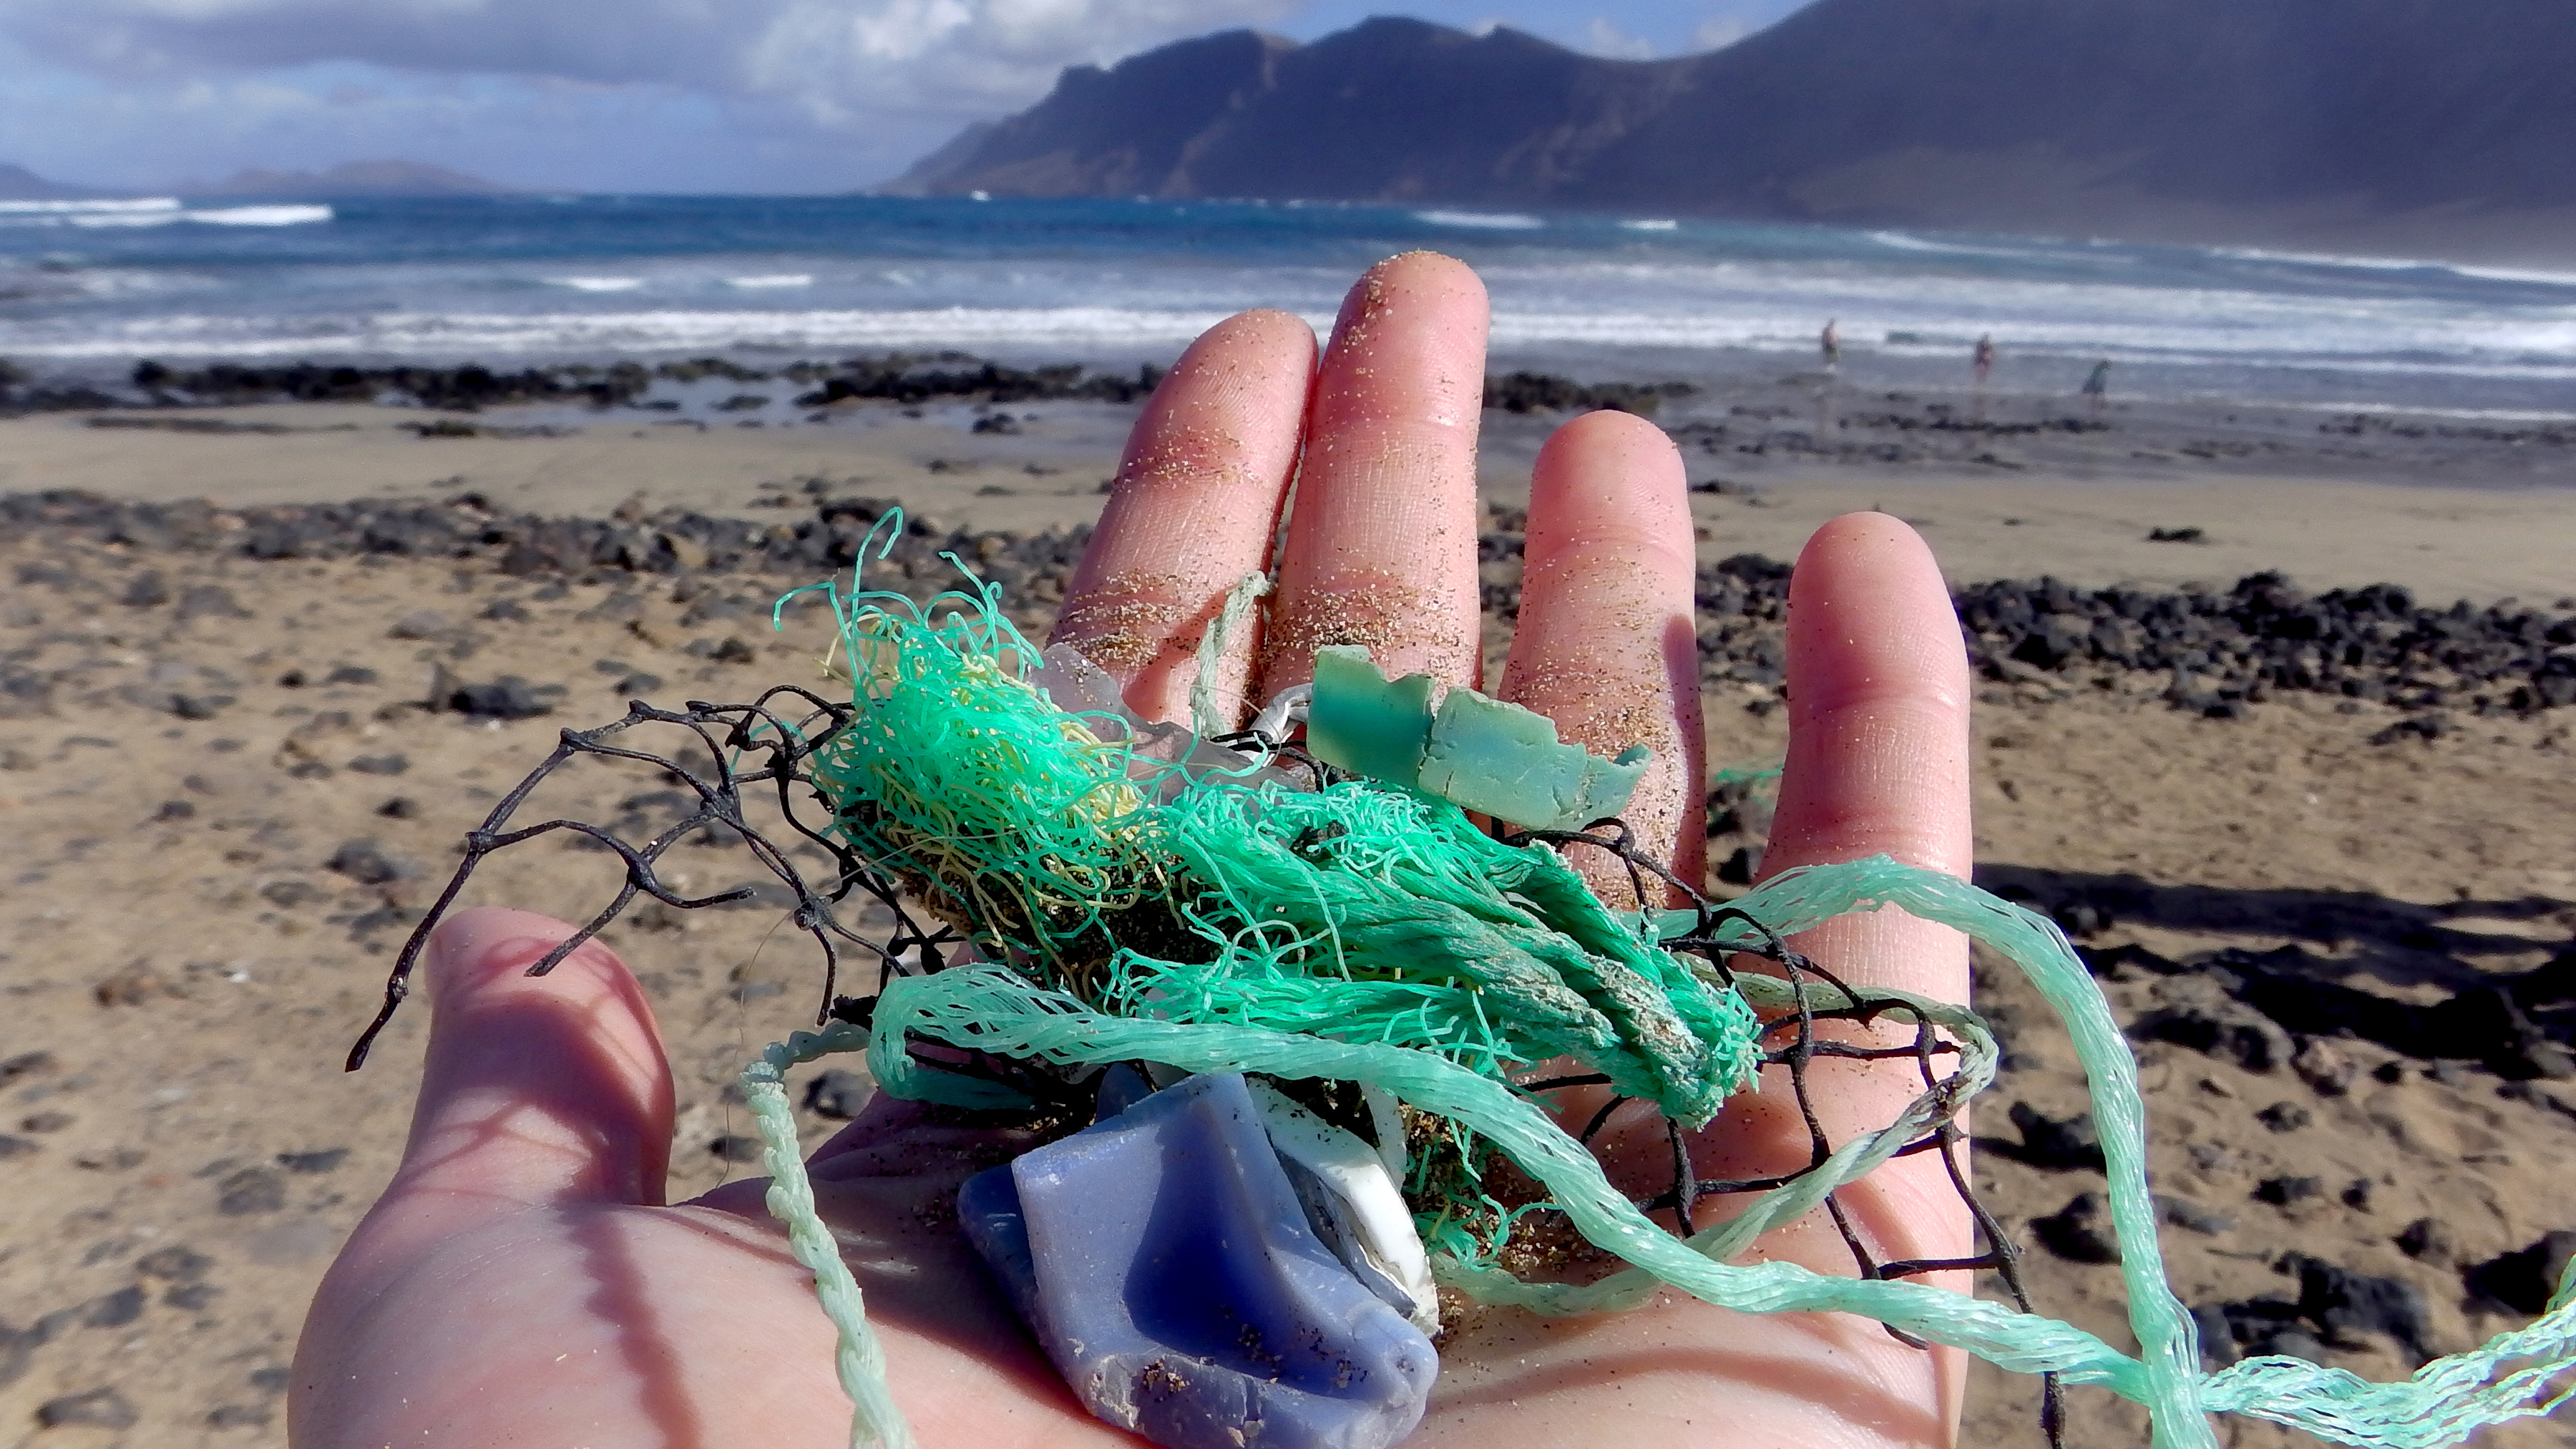 Study author Jenna Jambeck of the University of Georgia collects plastic samples from a beach near Caleta de Famara, Canary Islands, Spain. (Malin Jacob)